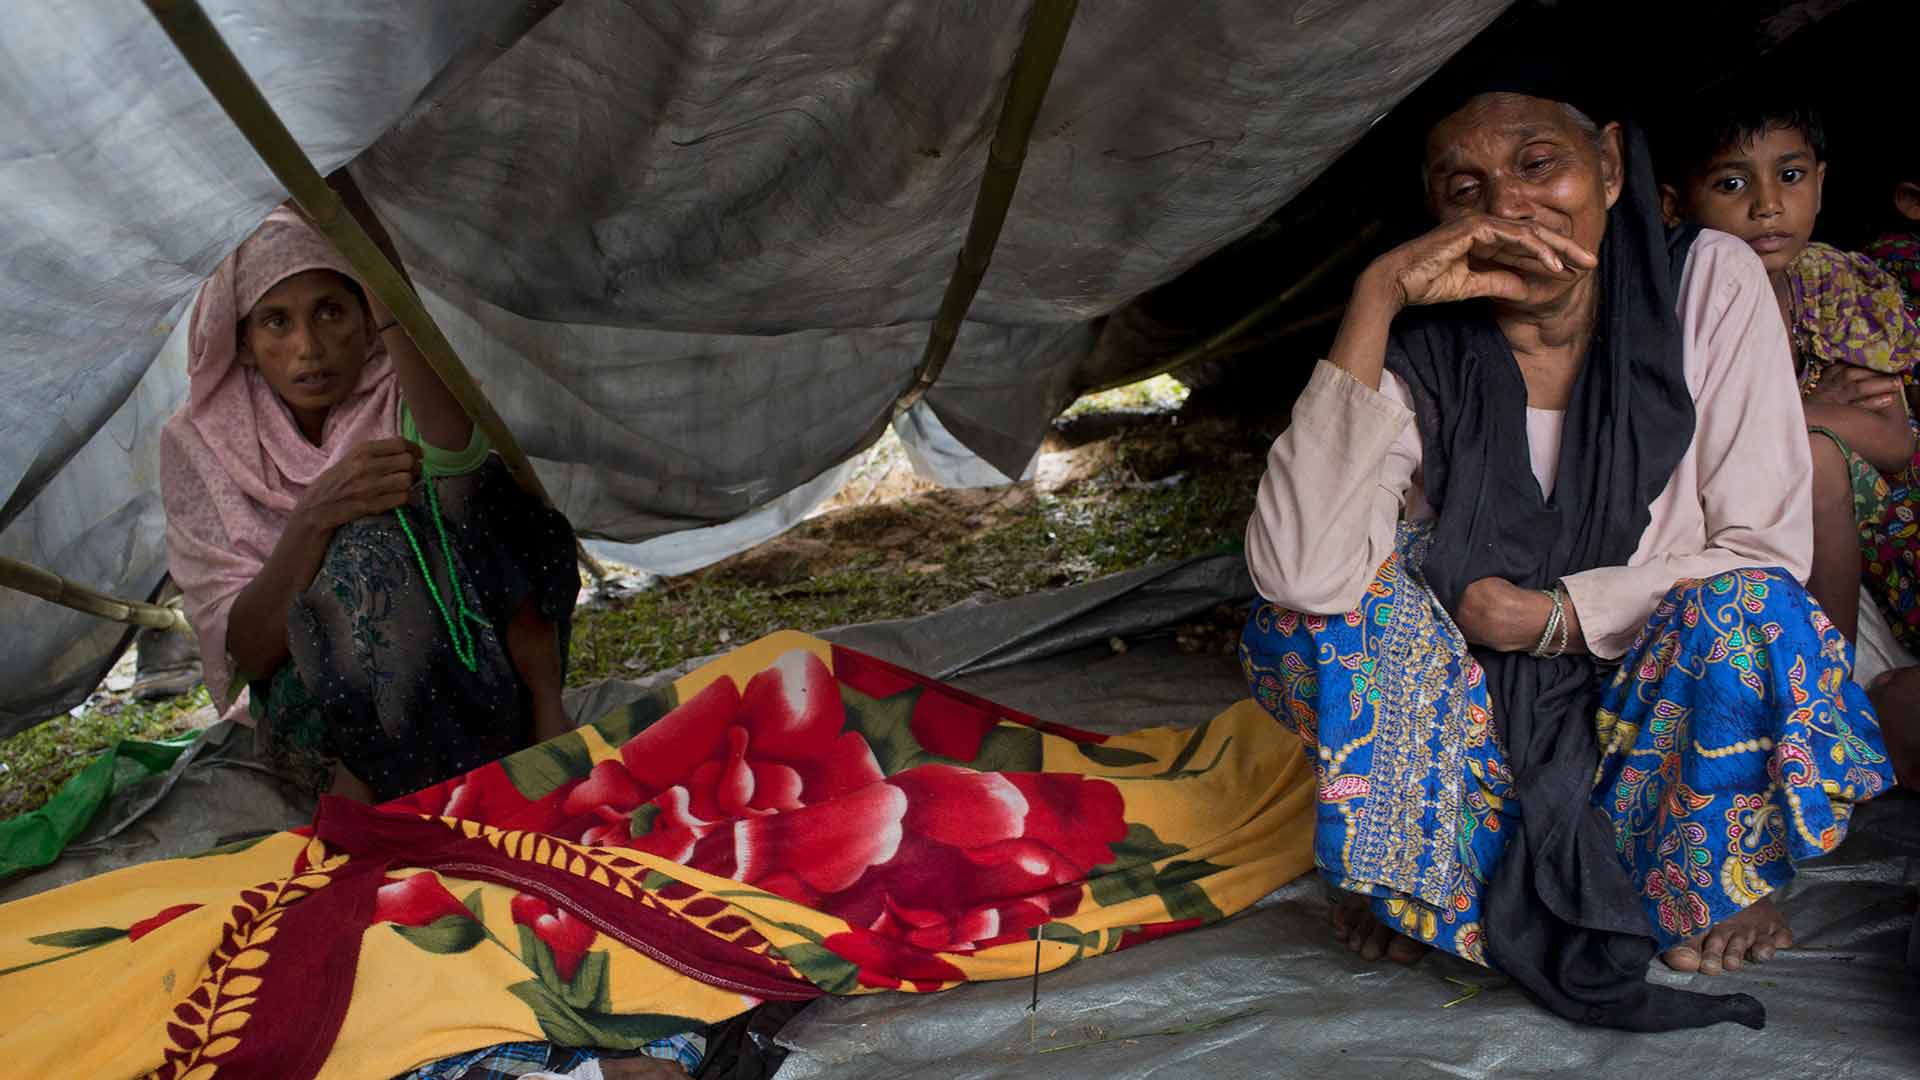 UN: Rohingya refugee camps “bursting at the seams”